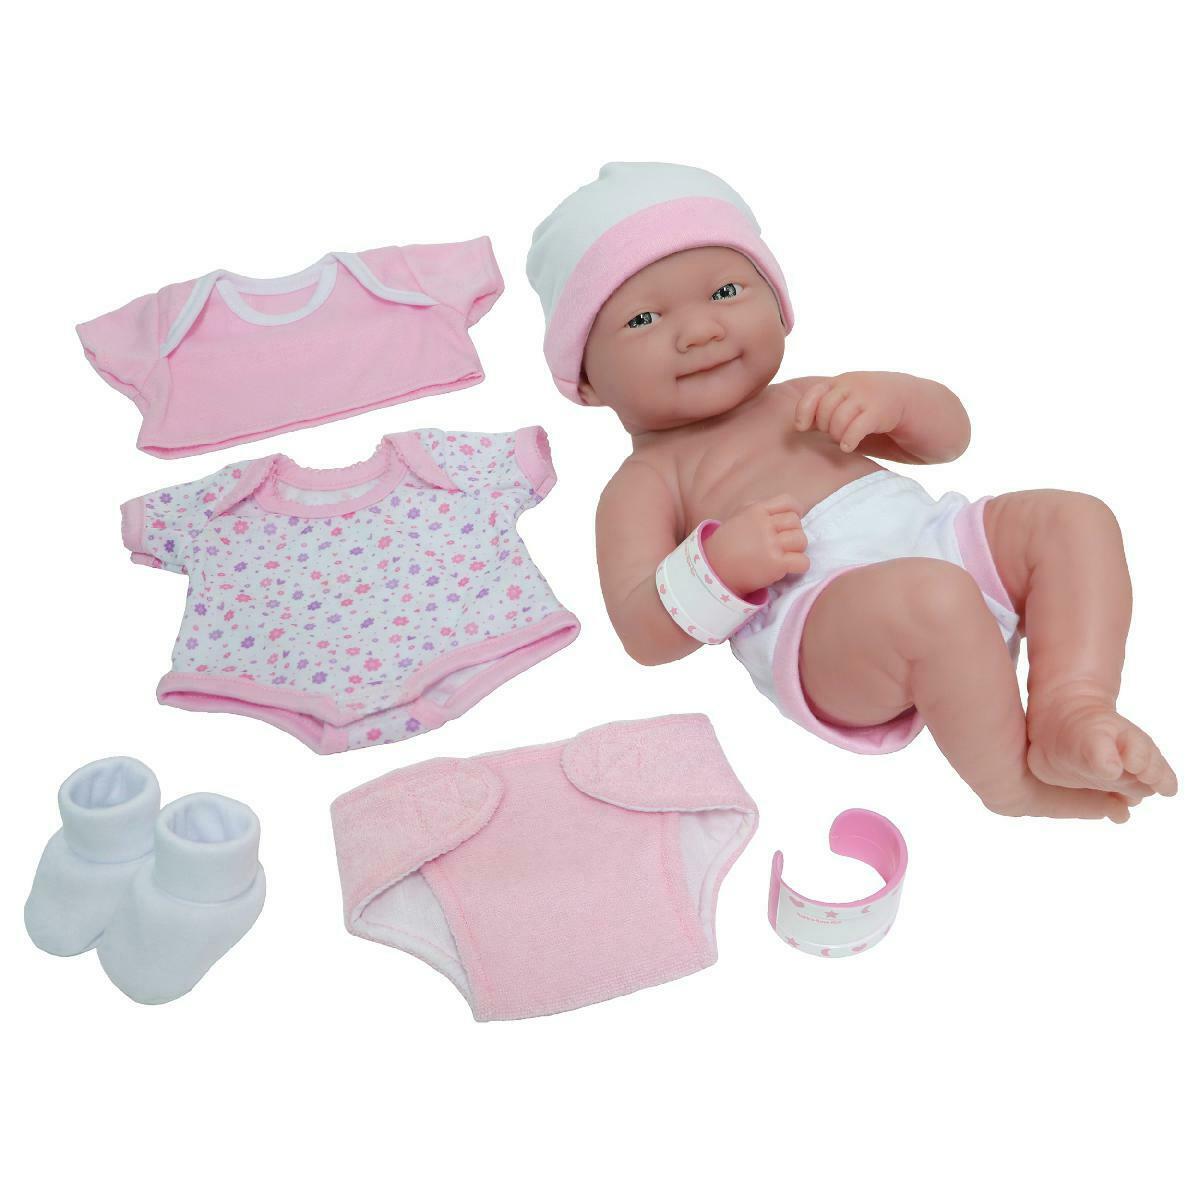 Jc Toys 18543_a La Newborn 14" Baby Doll 8pc - Pink